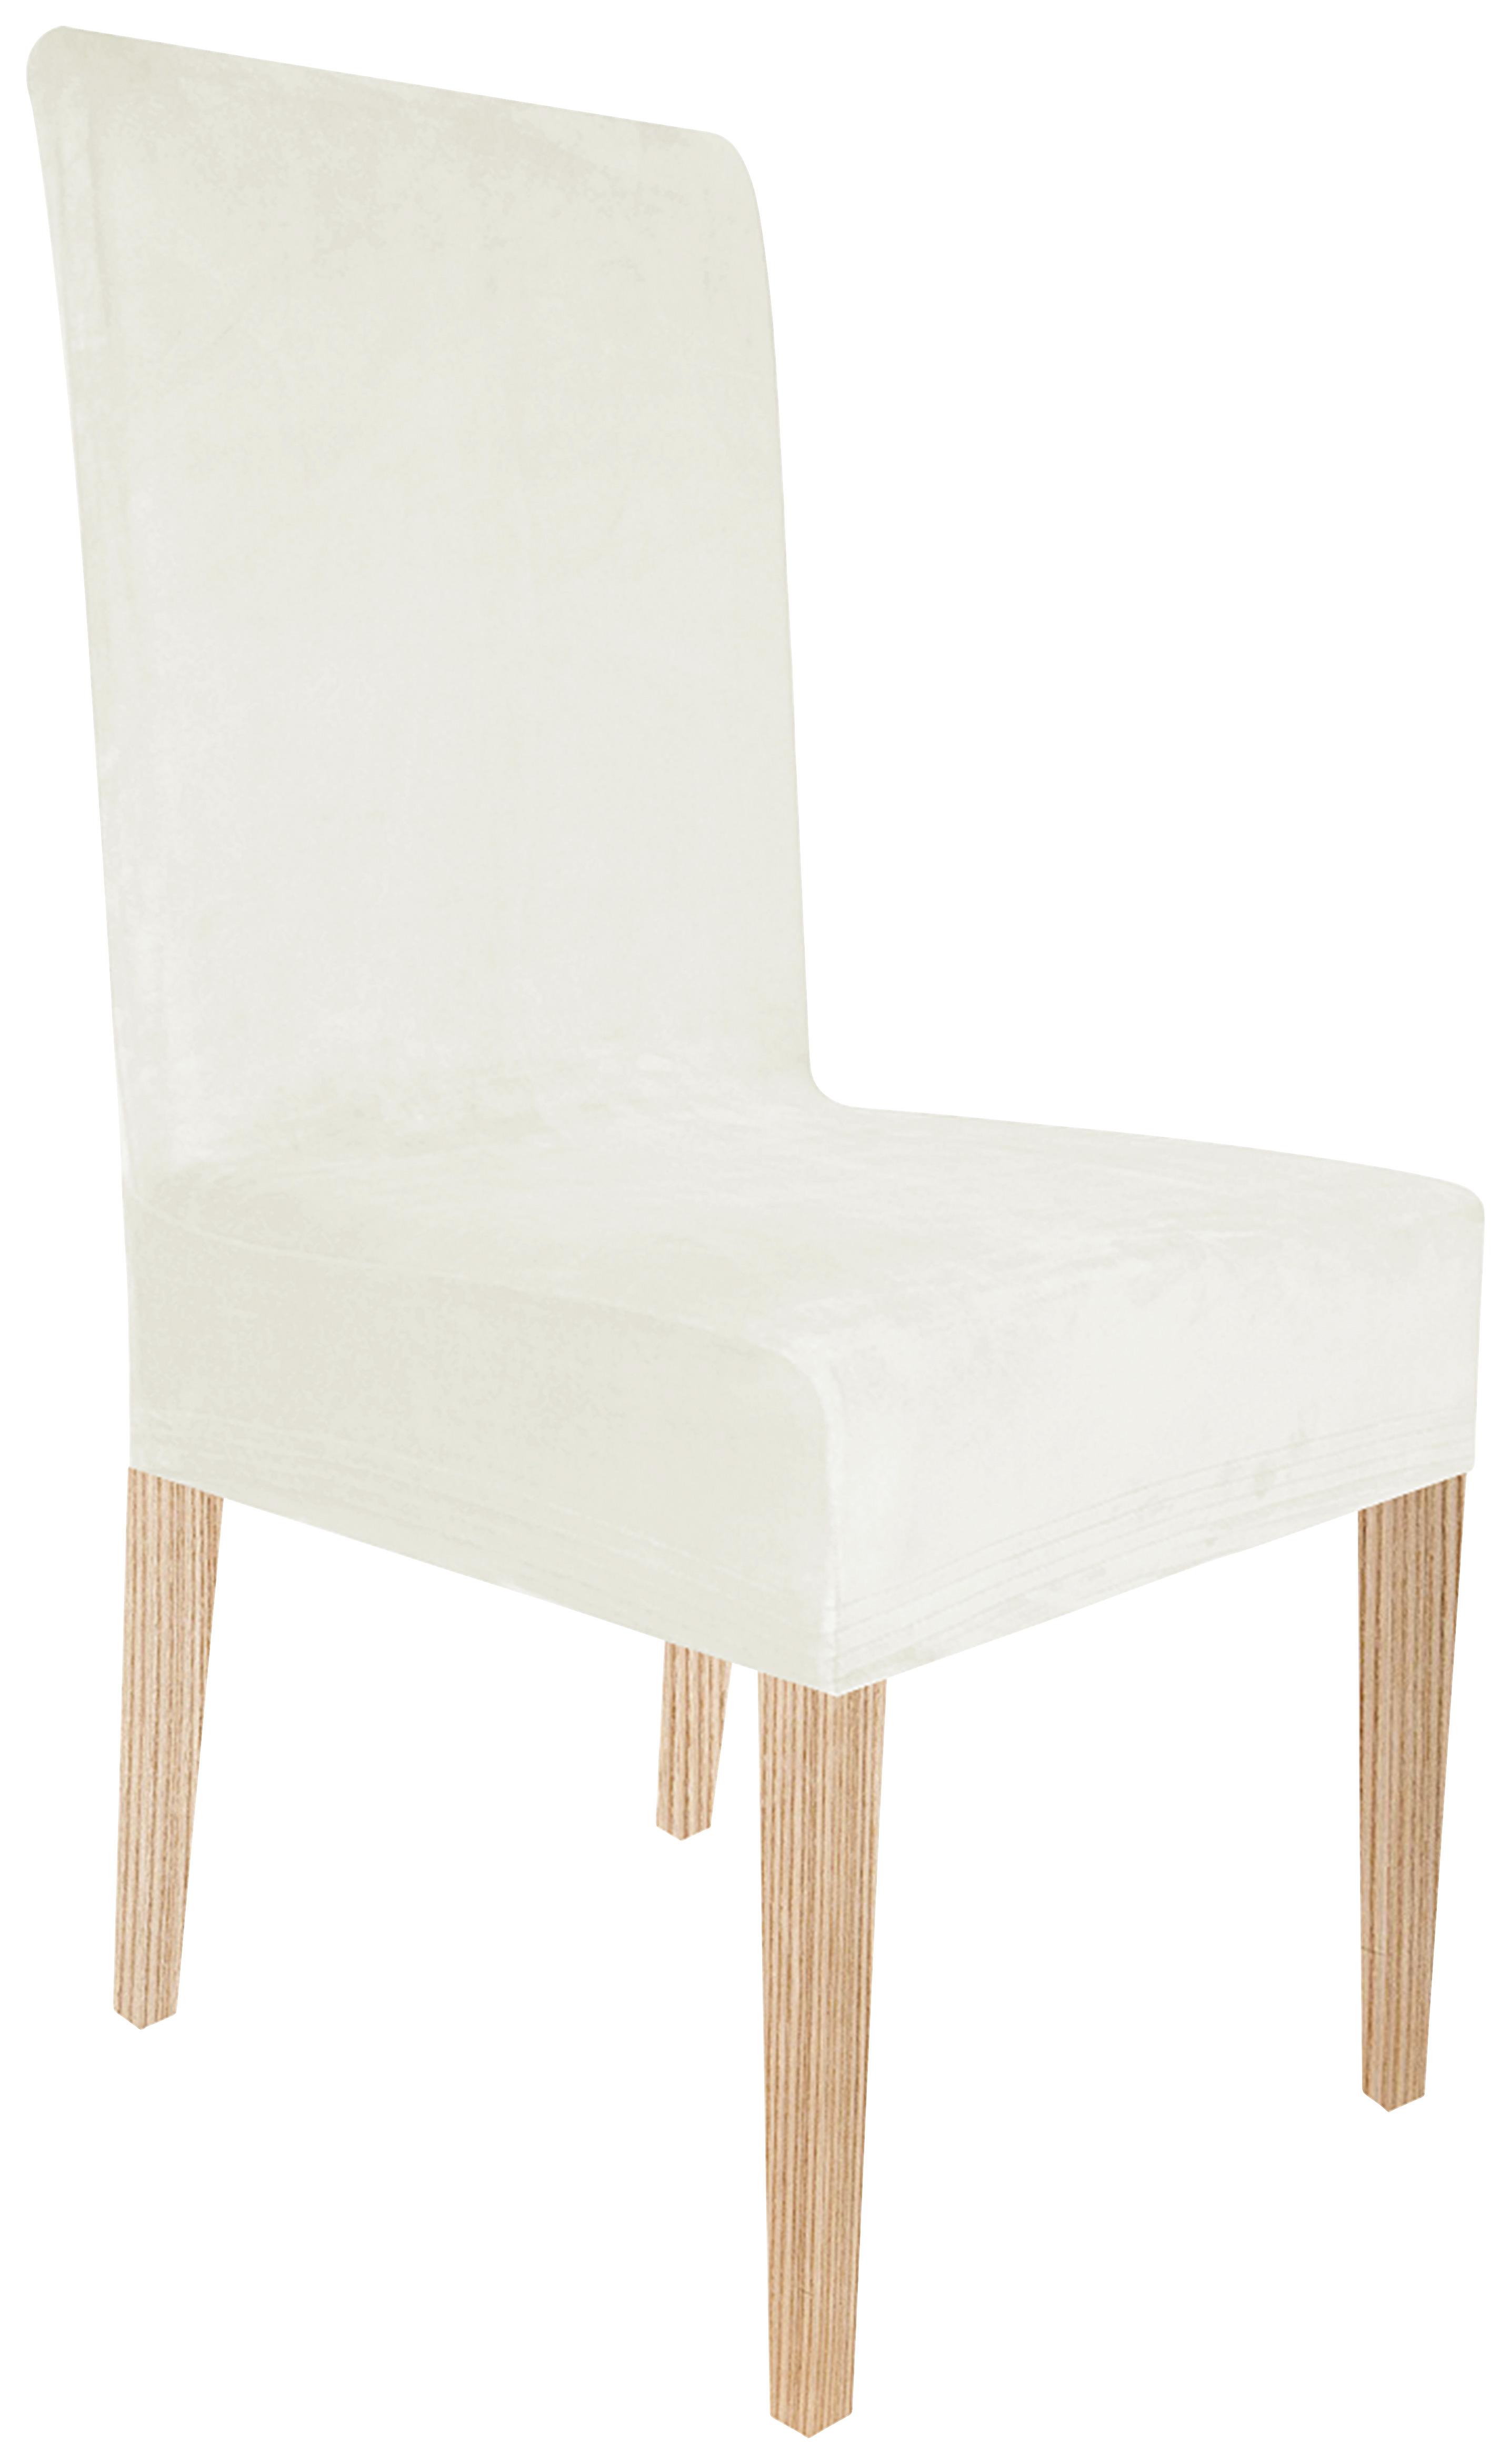 Husă pentru scaun Henry - alb, Romantik / Landhaus, textil (40/65/45cm) - Modern Living